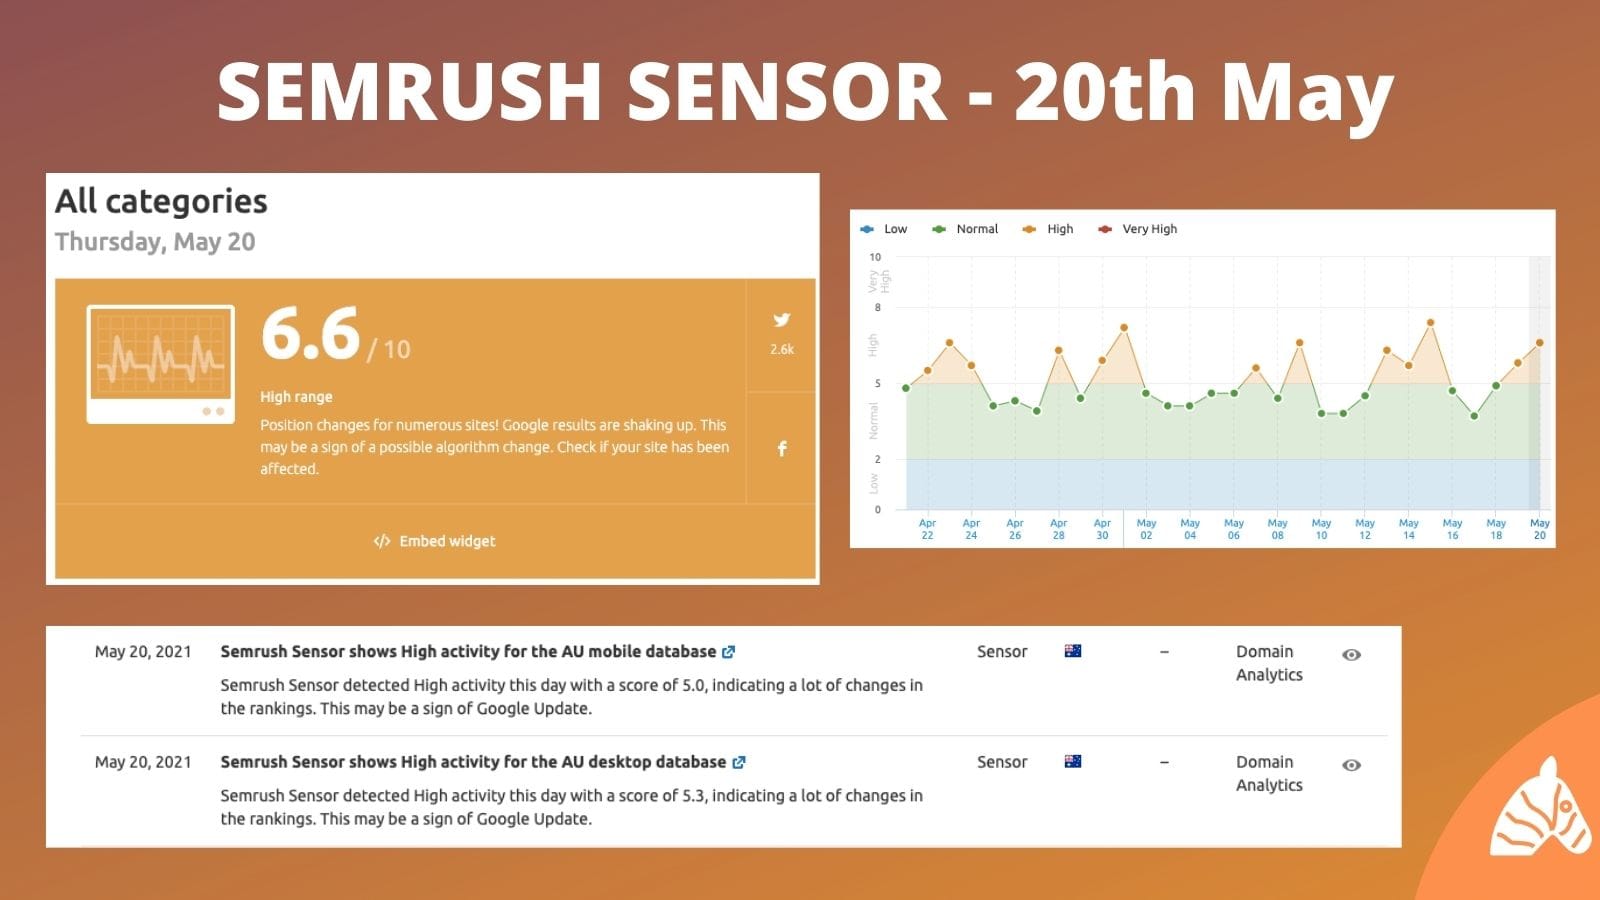 SEMRUSH sensor chart from the 20th May, 2021